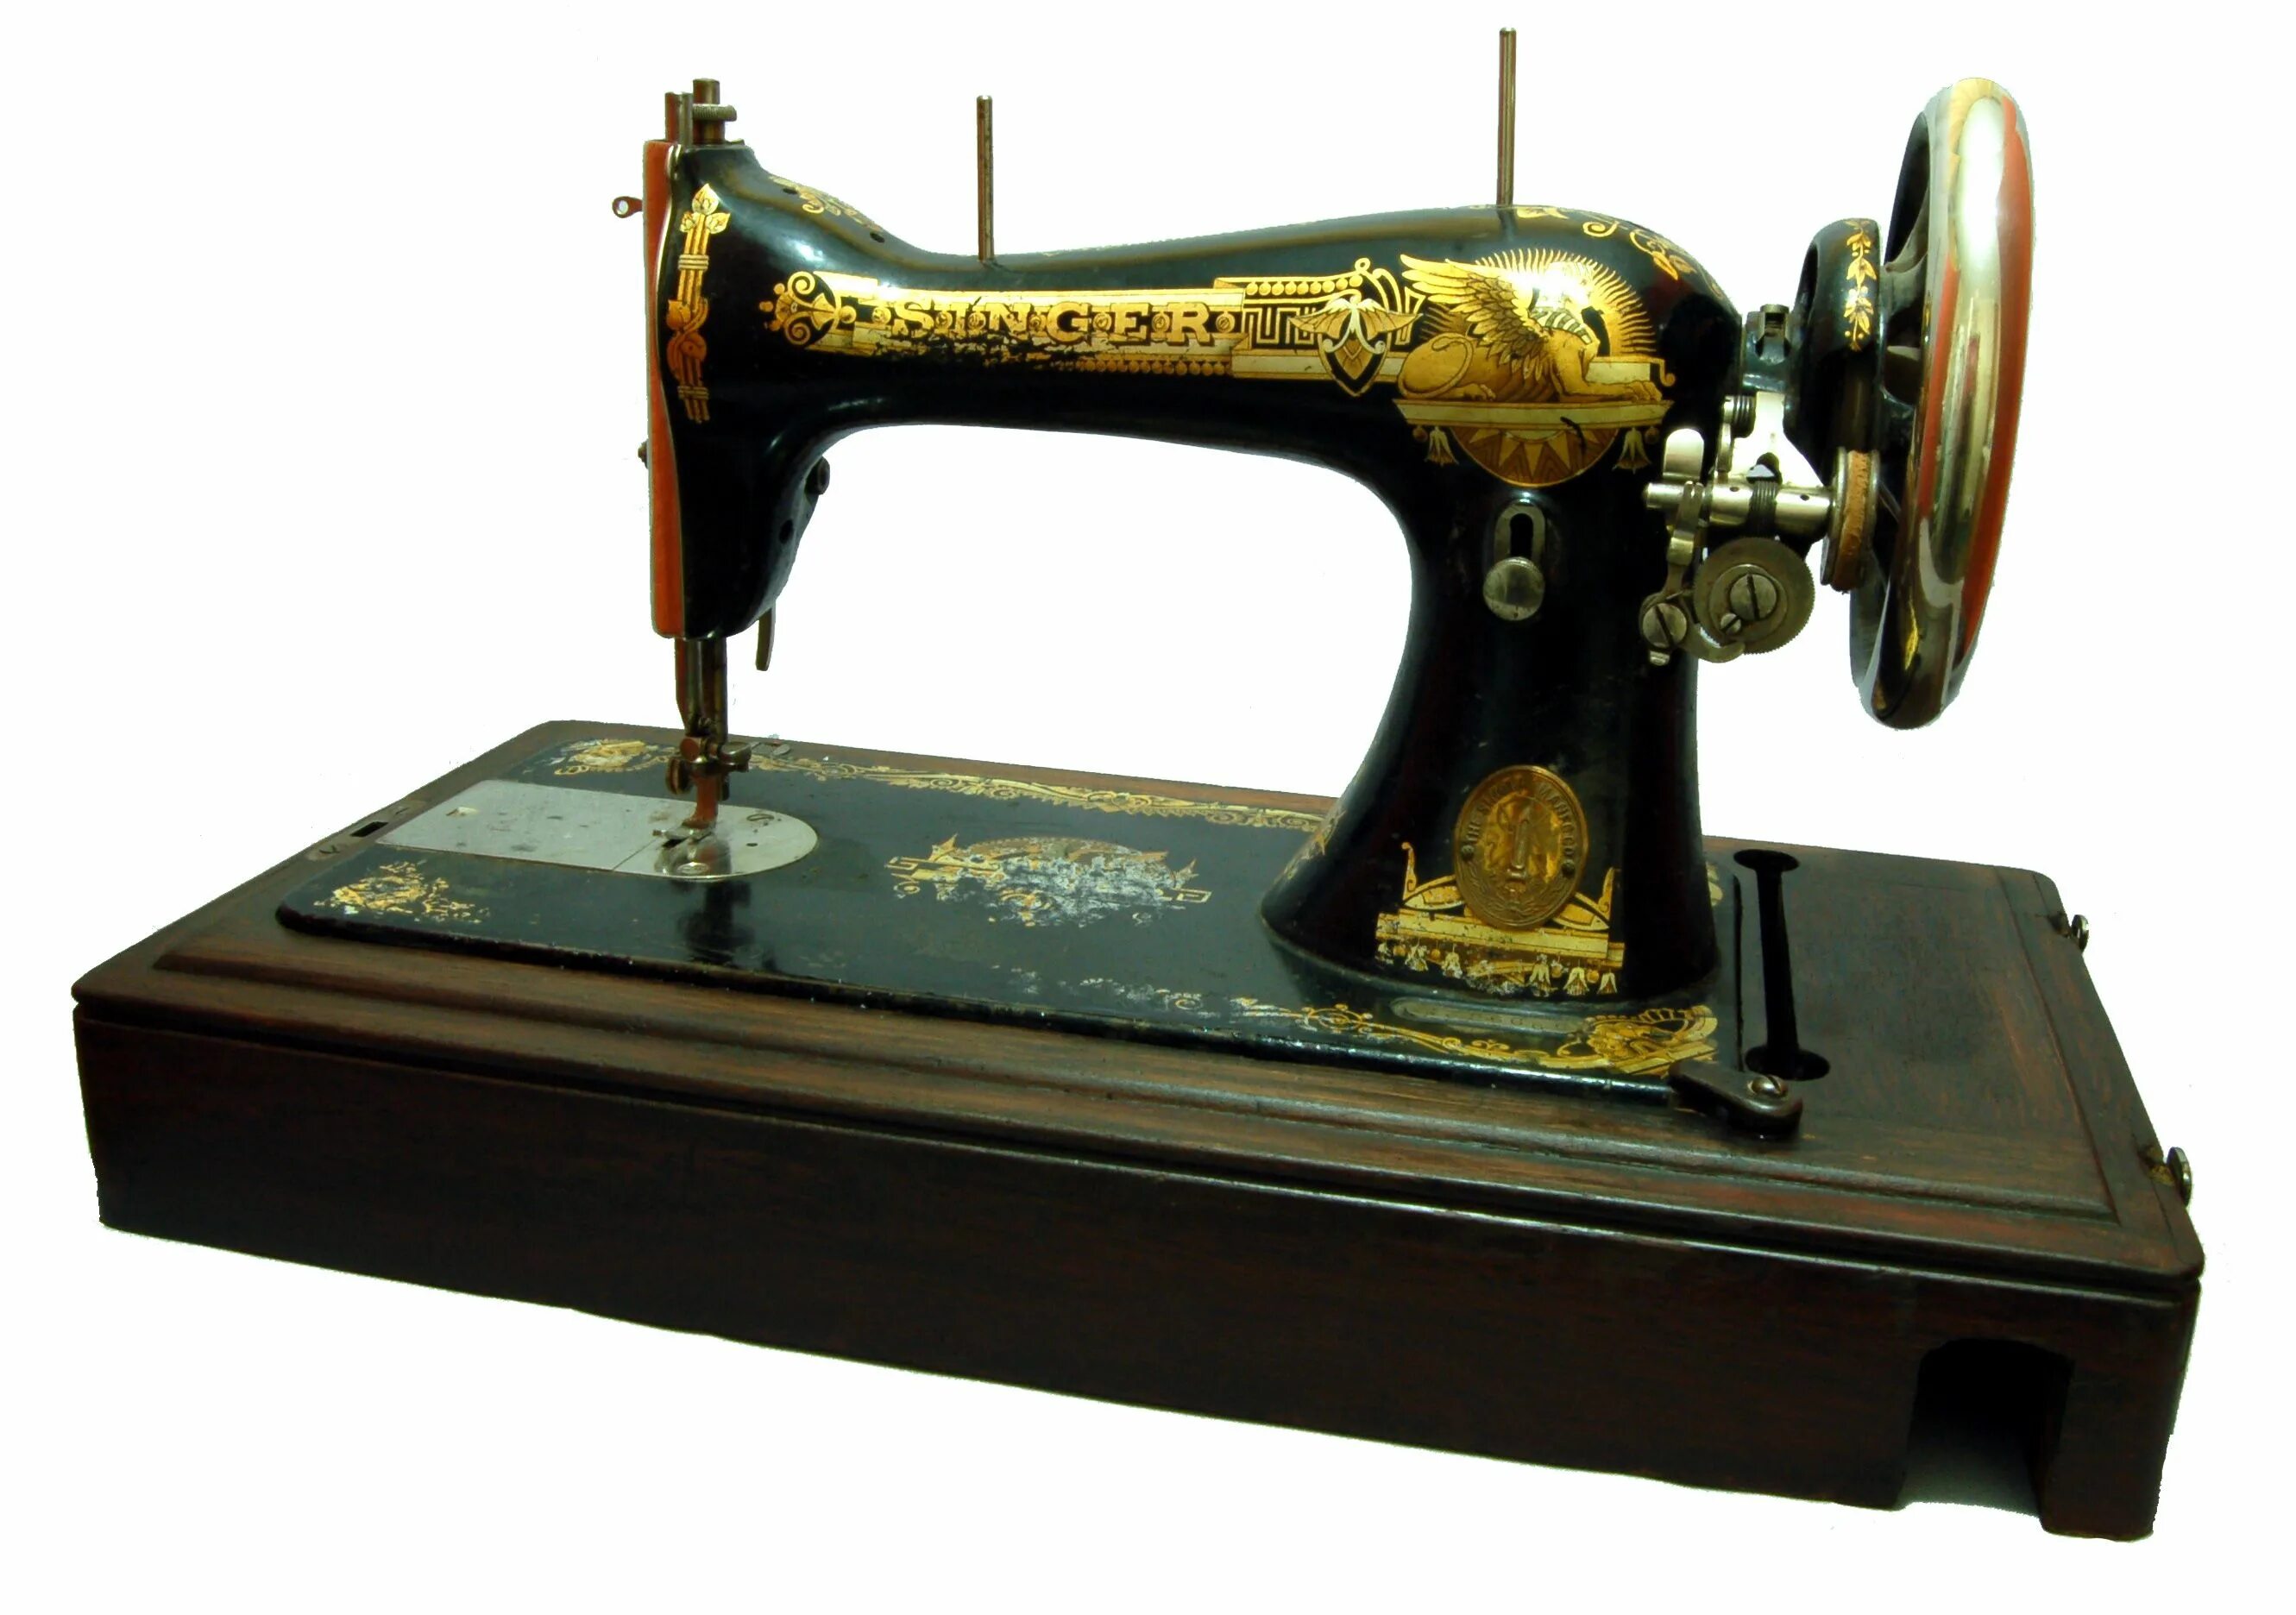 Швейная машинка karingbee. Швейная машинка Зингер 1886. Зингер швейная машинка 1910 года. Швейная машинка Зингер 1911 года. Швейная машинка Зингер 1886 года.